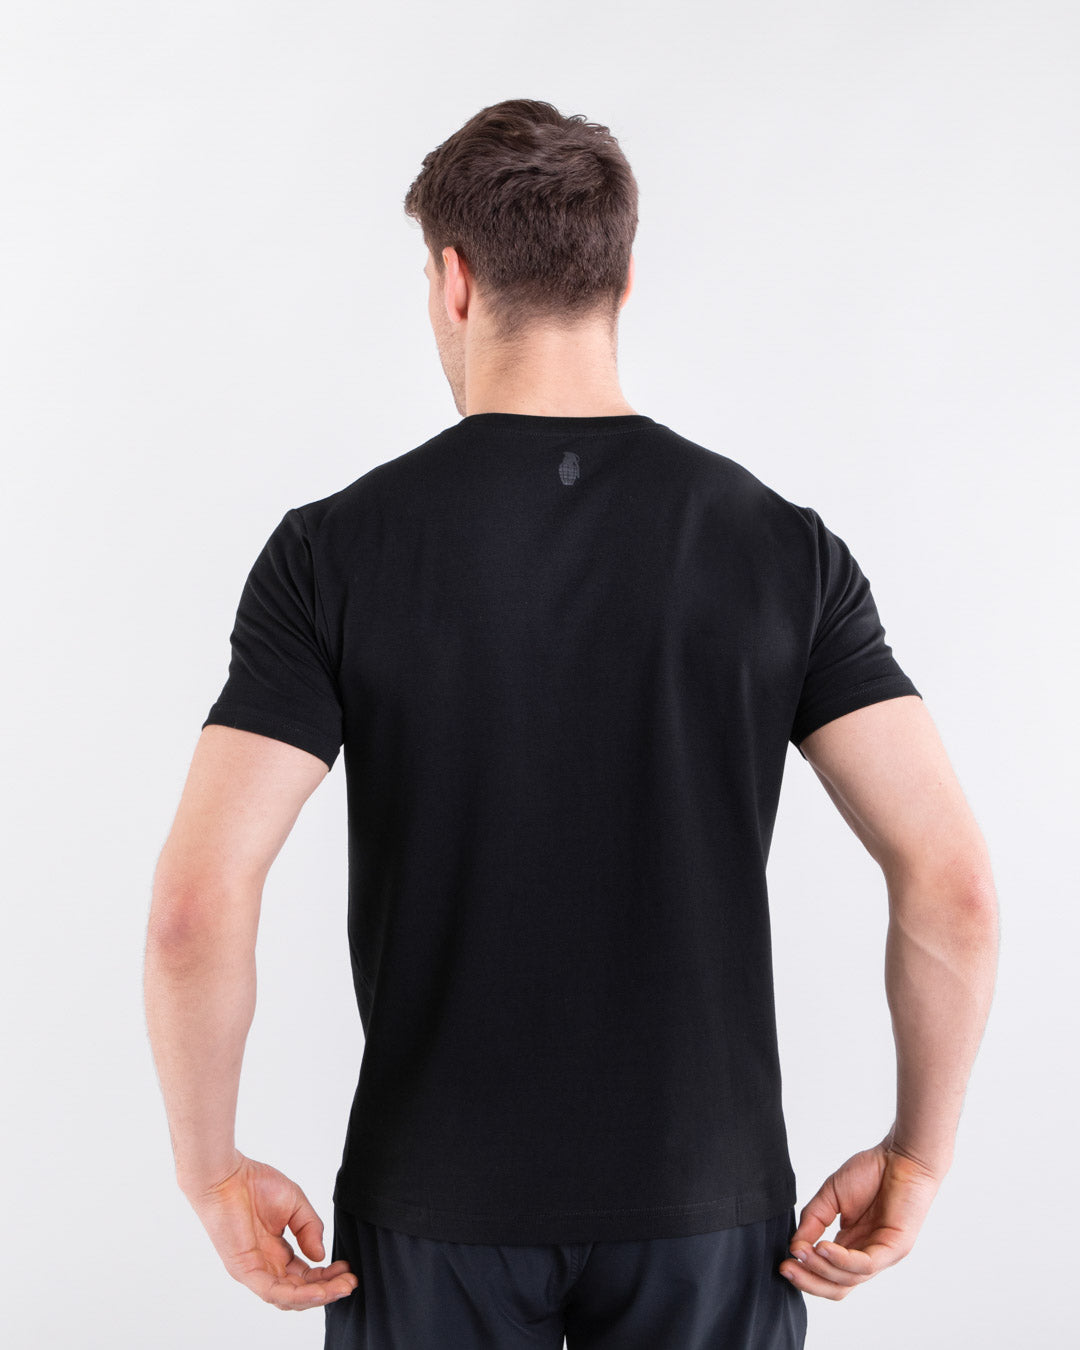 Grenade Mens Core T-Shirt Black on Black Back View